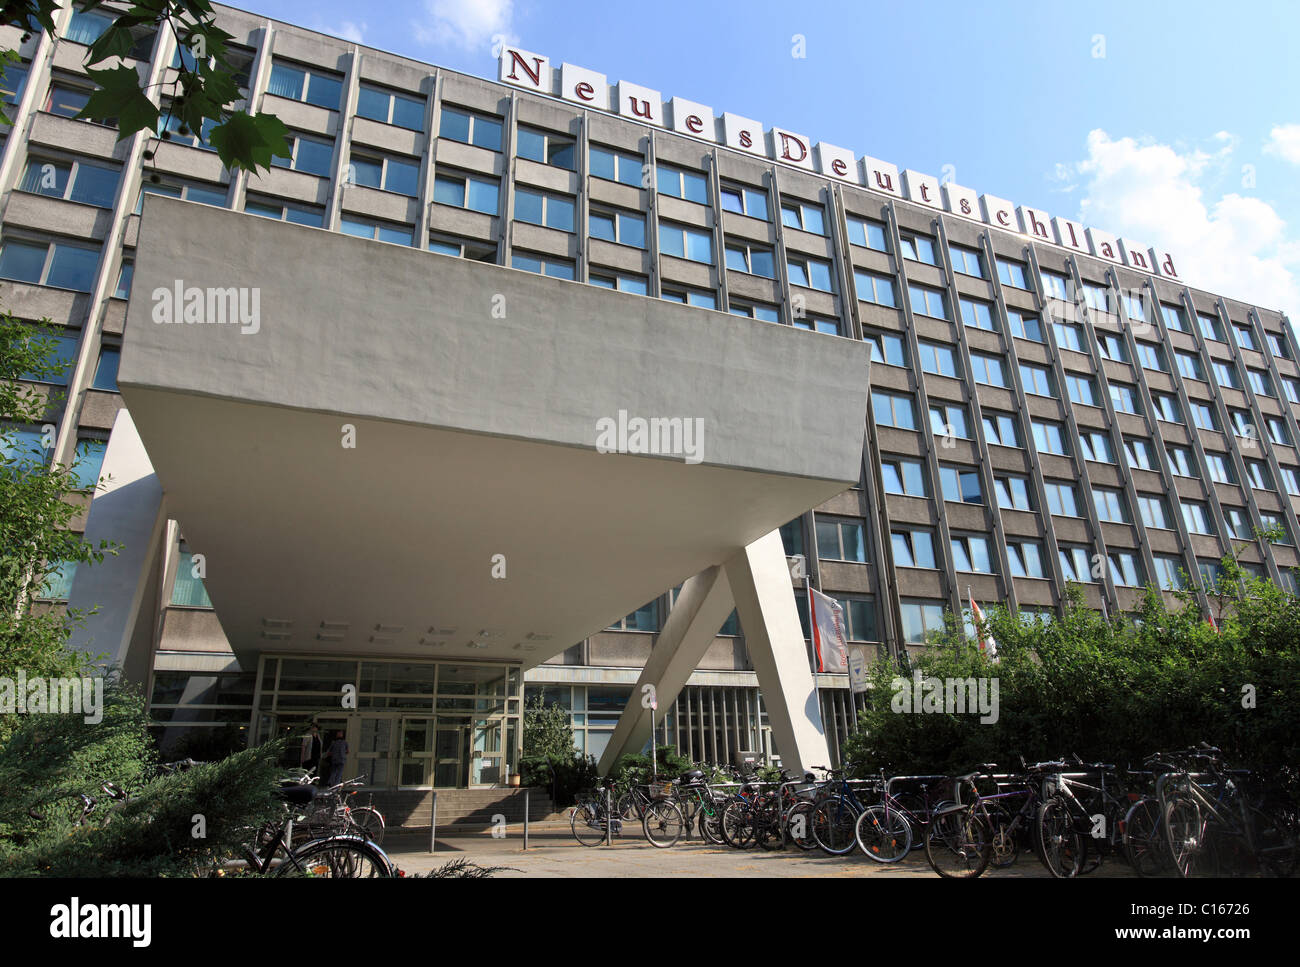 Neues Deutschland publishing company, Berlin, Germany, Europe Stock Photo